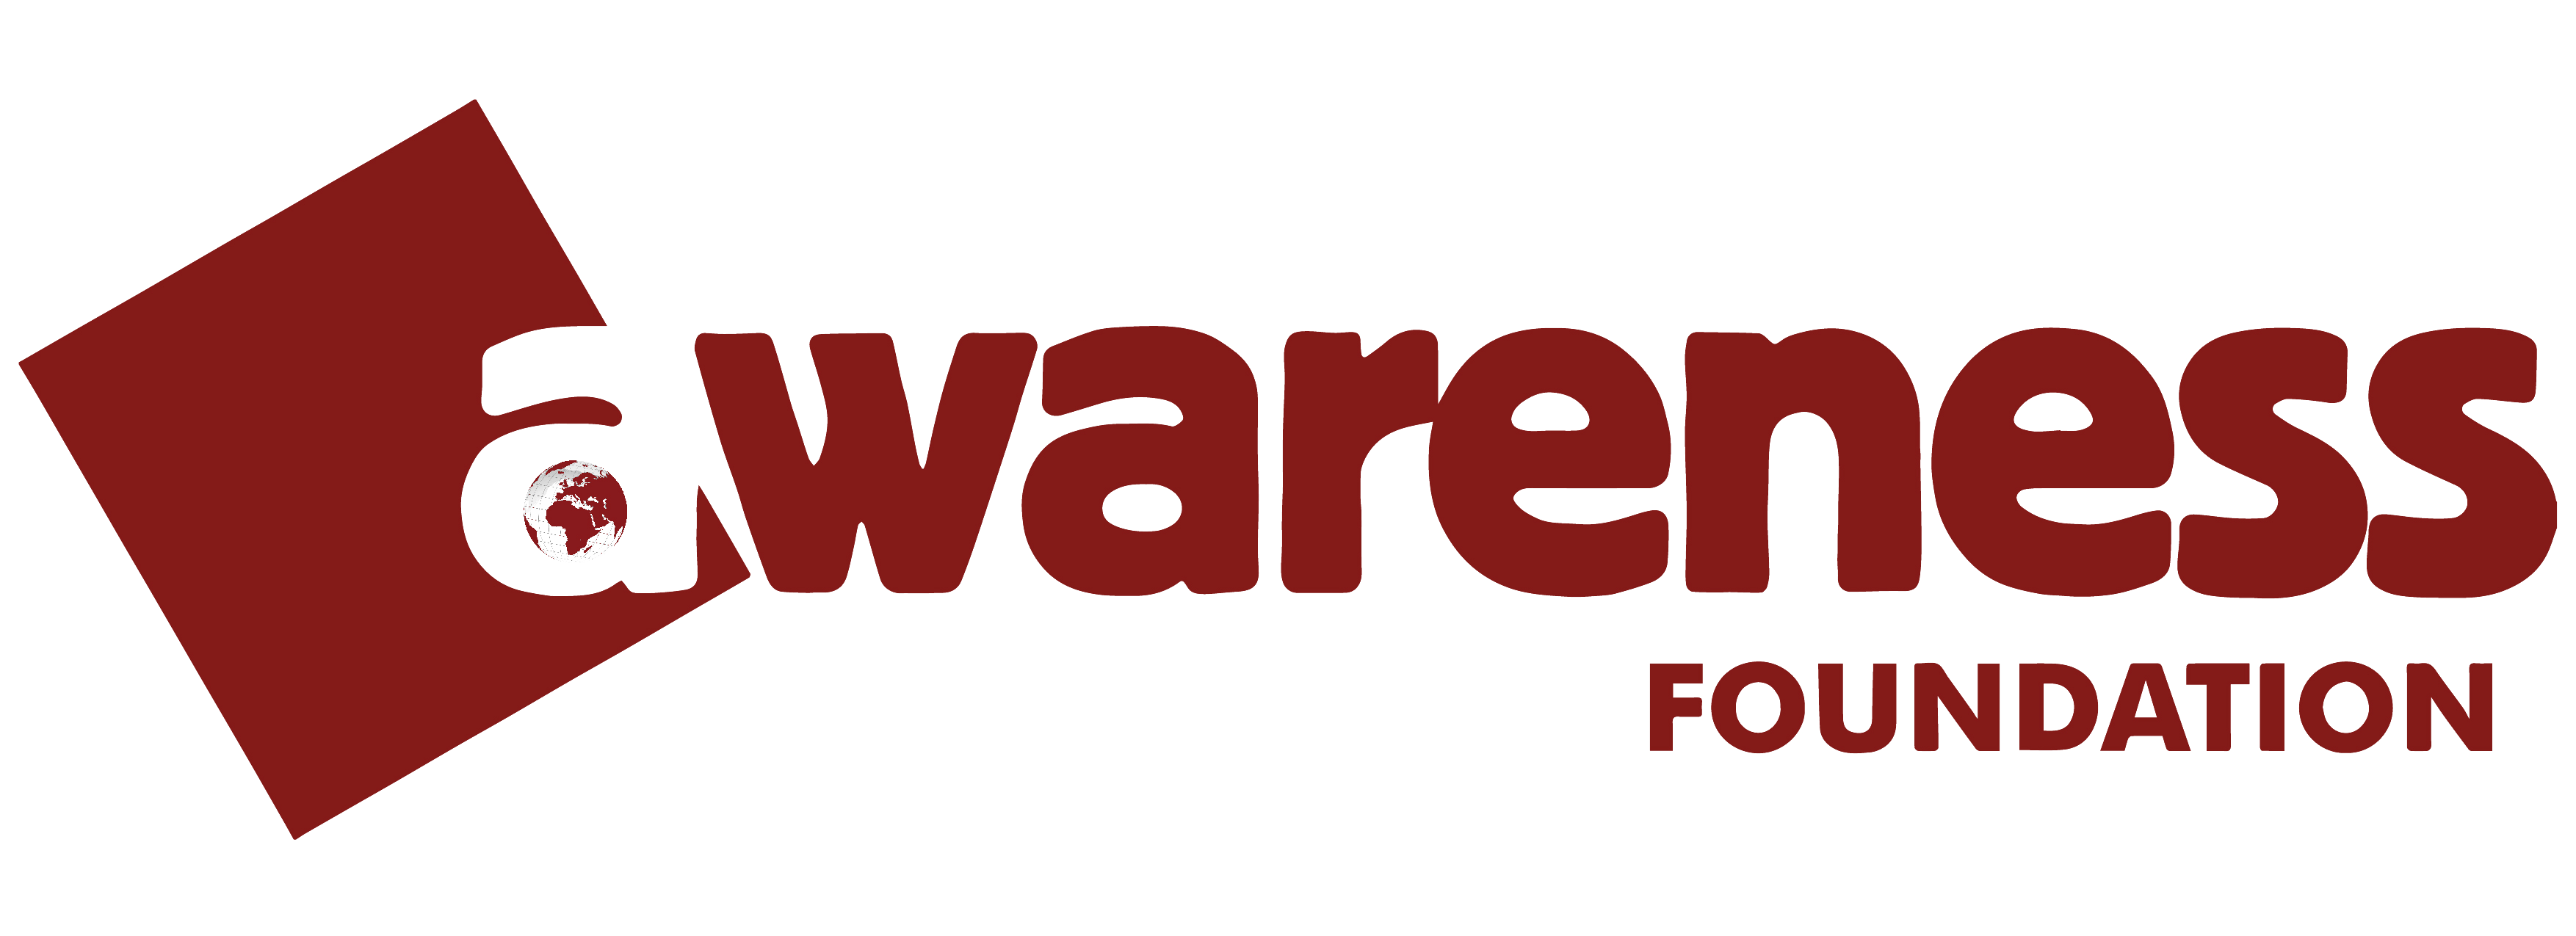 Awareness Foundation's logo